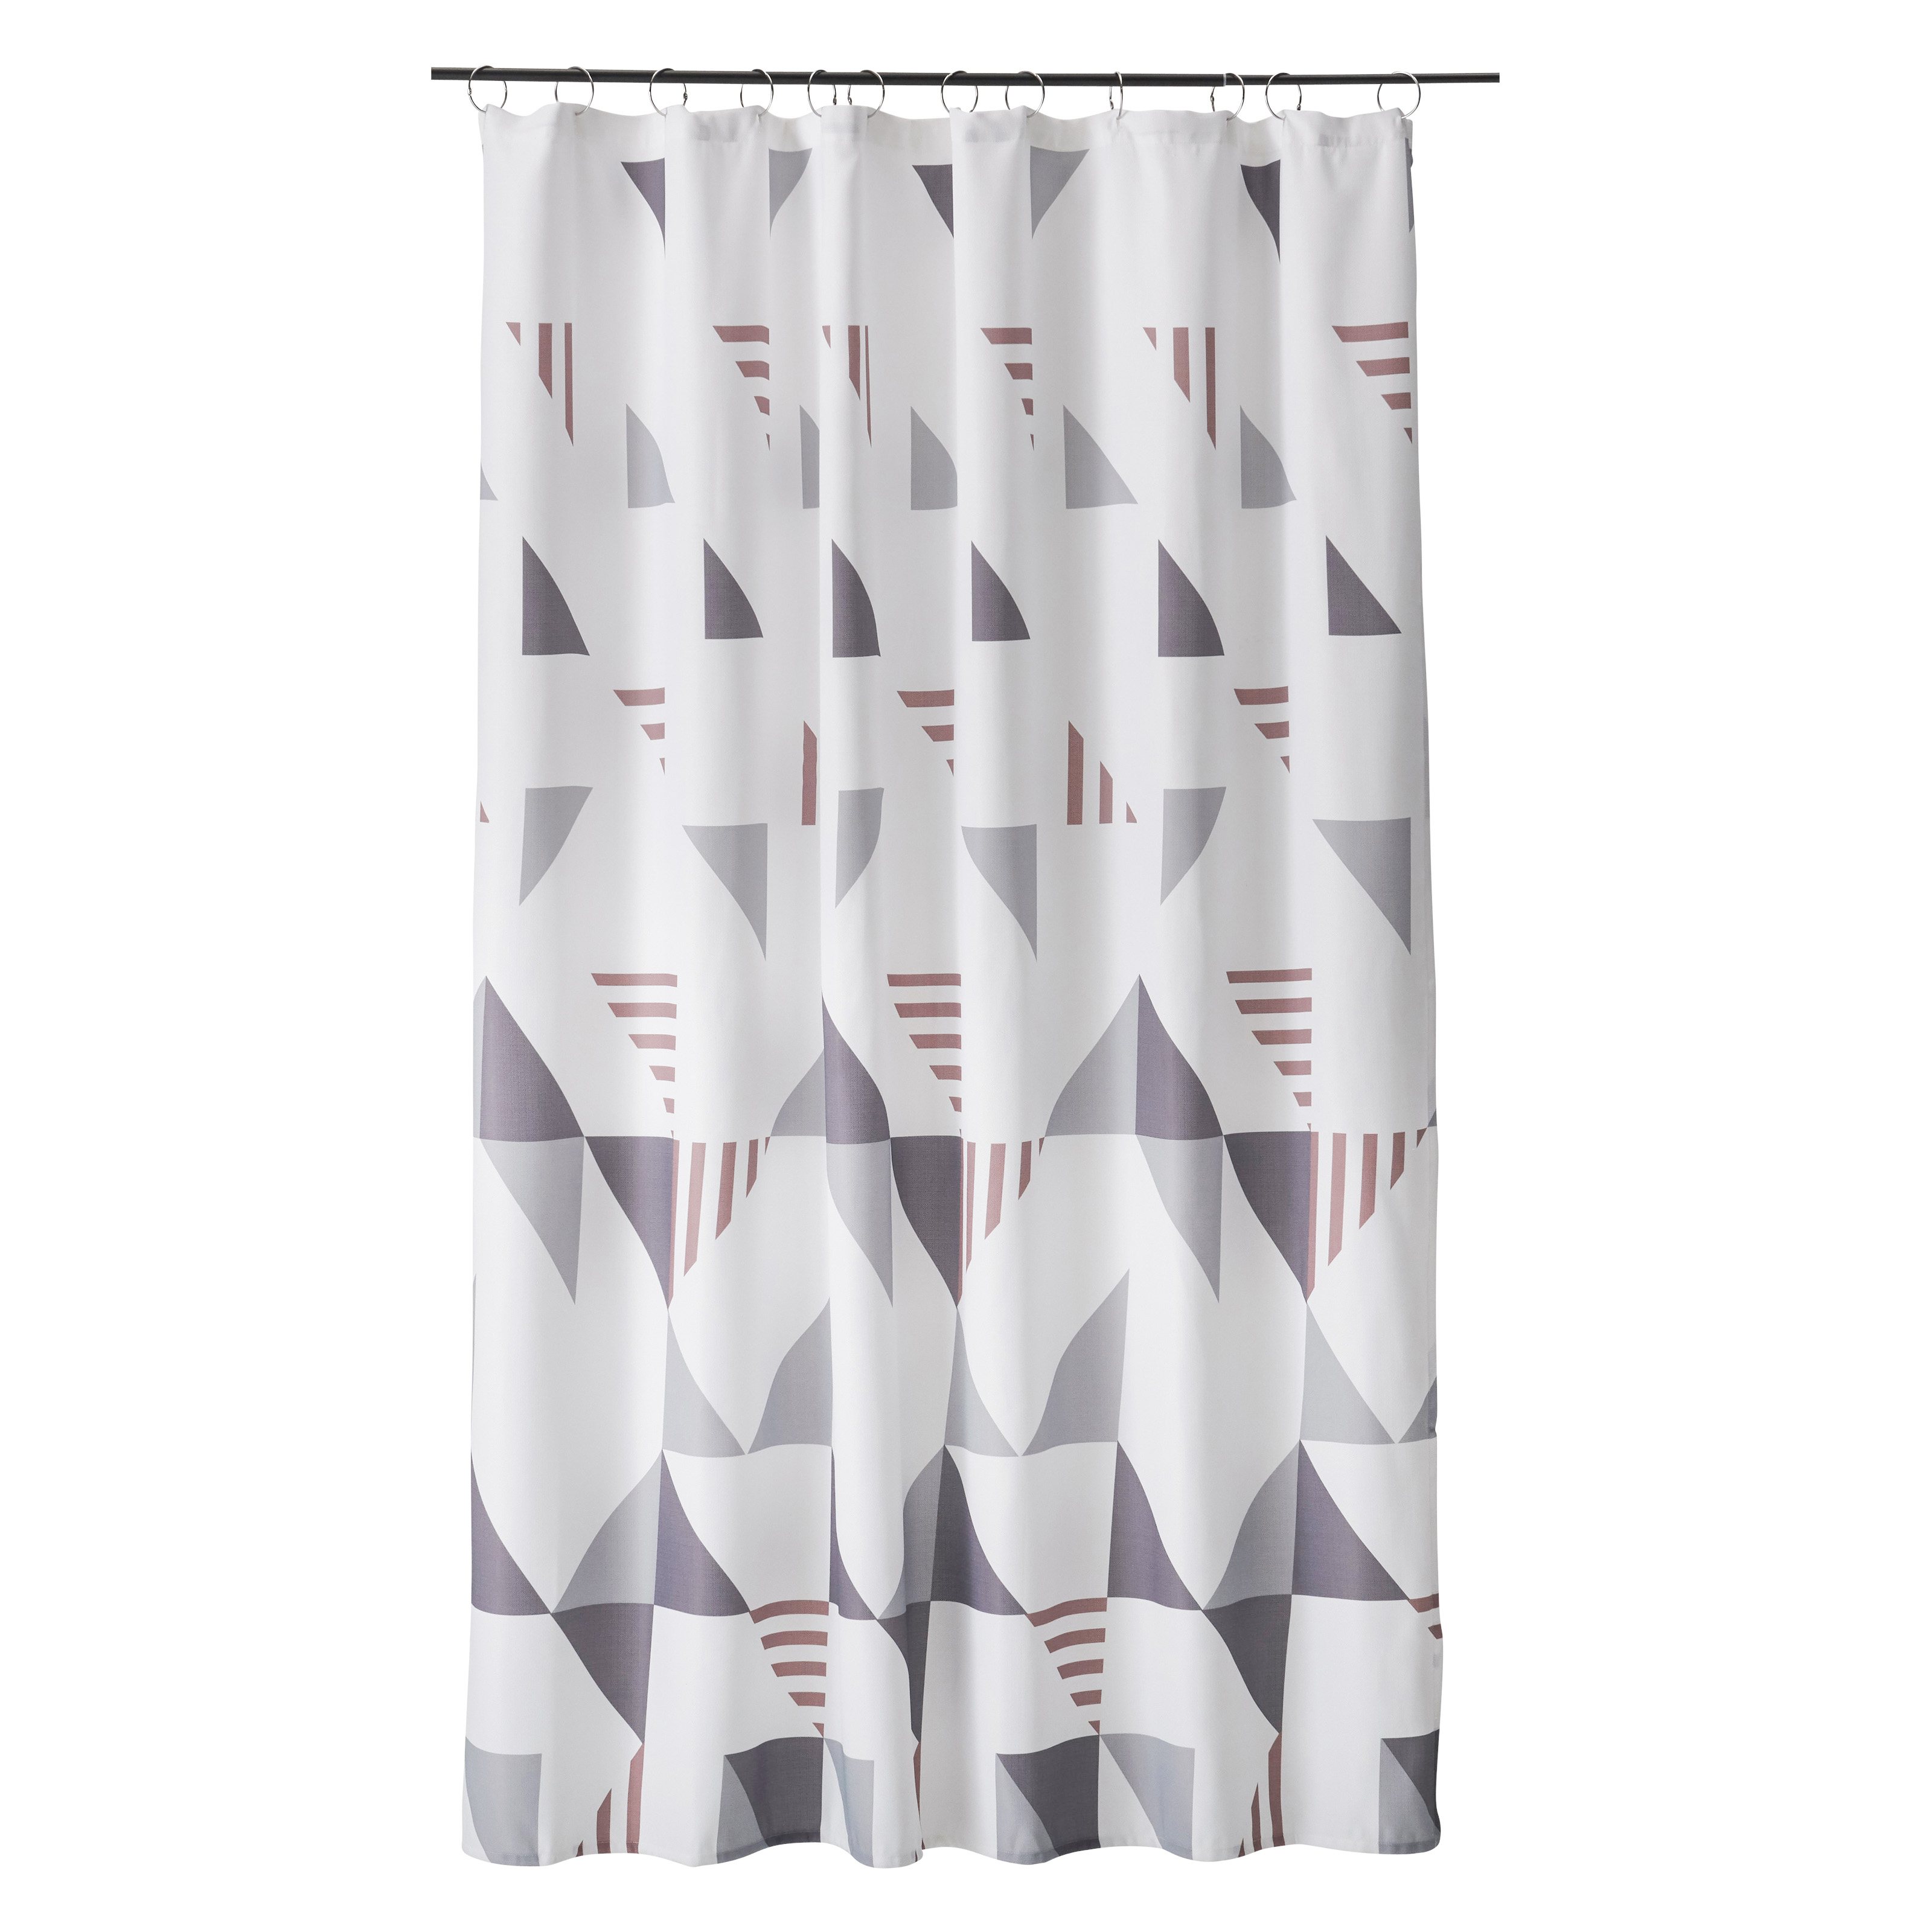 MoDRN Scandinavian Triangle Shower Curtain - image 2 of 7